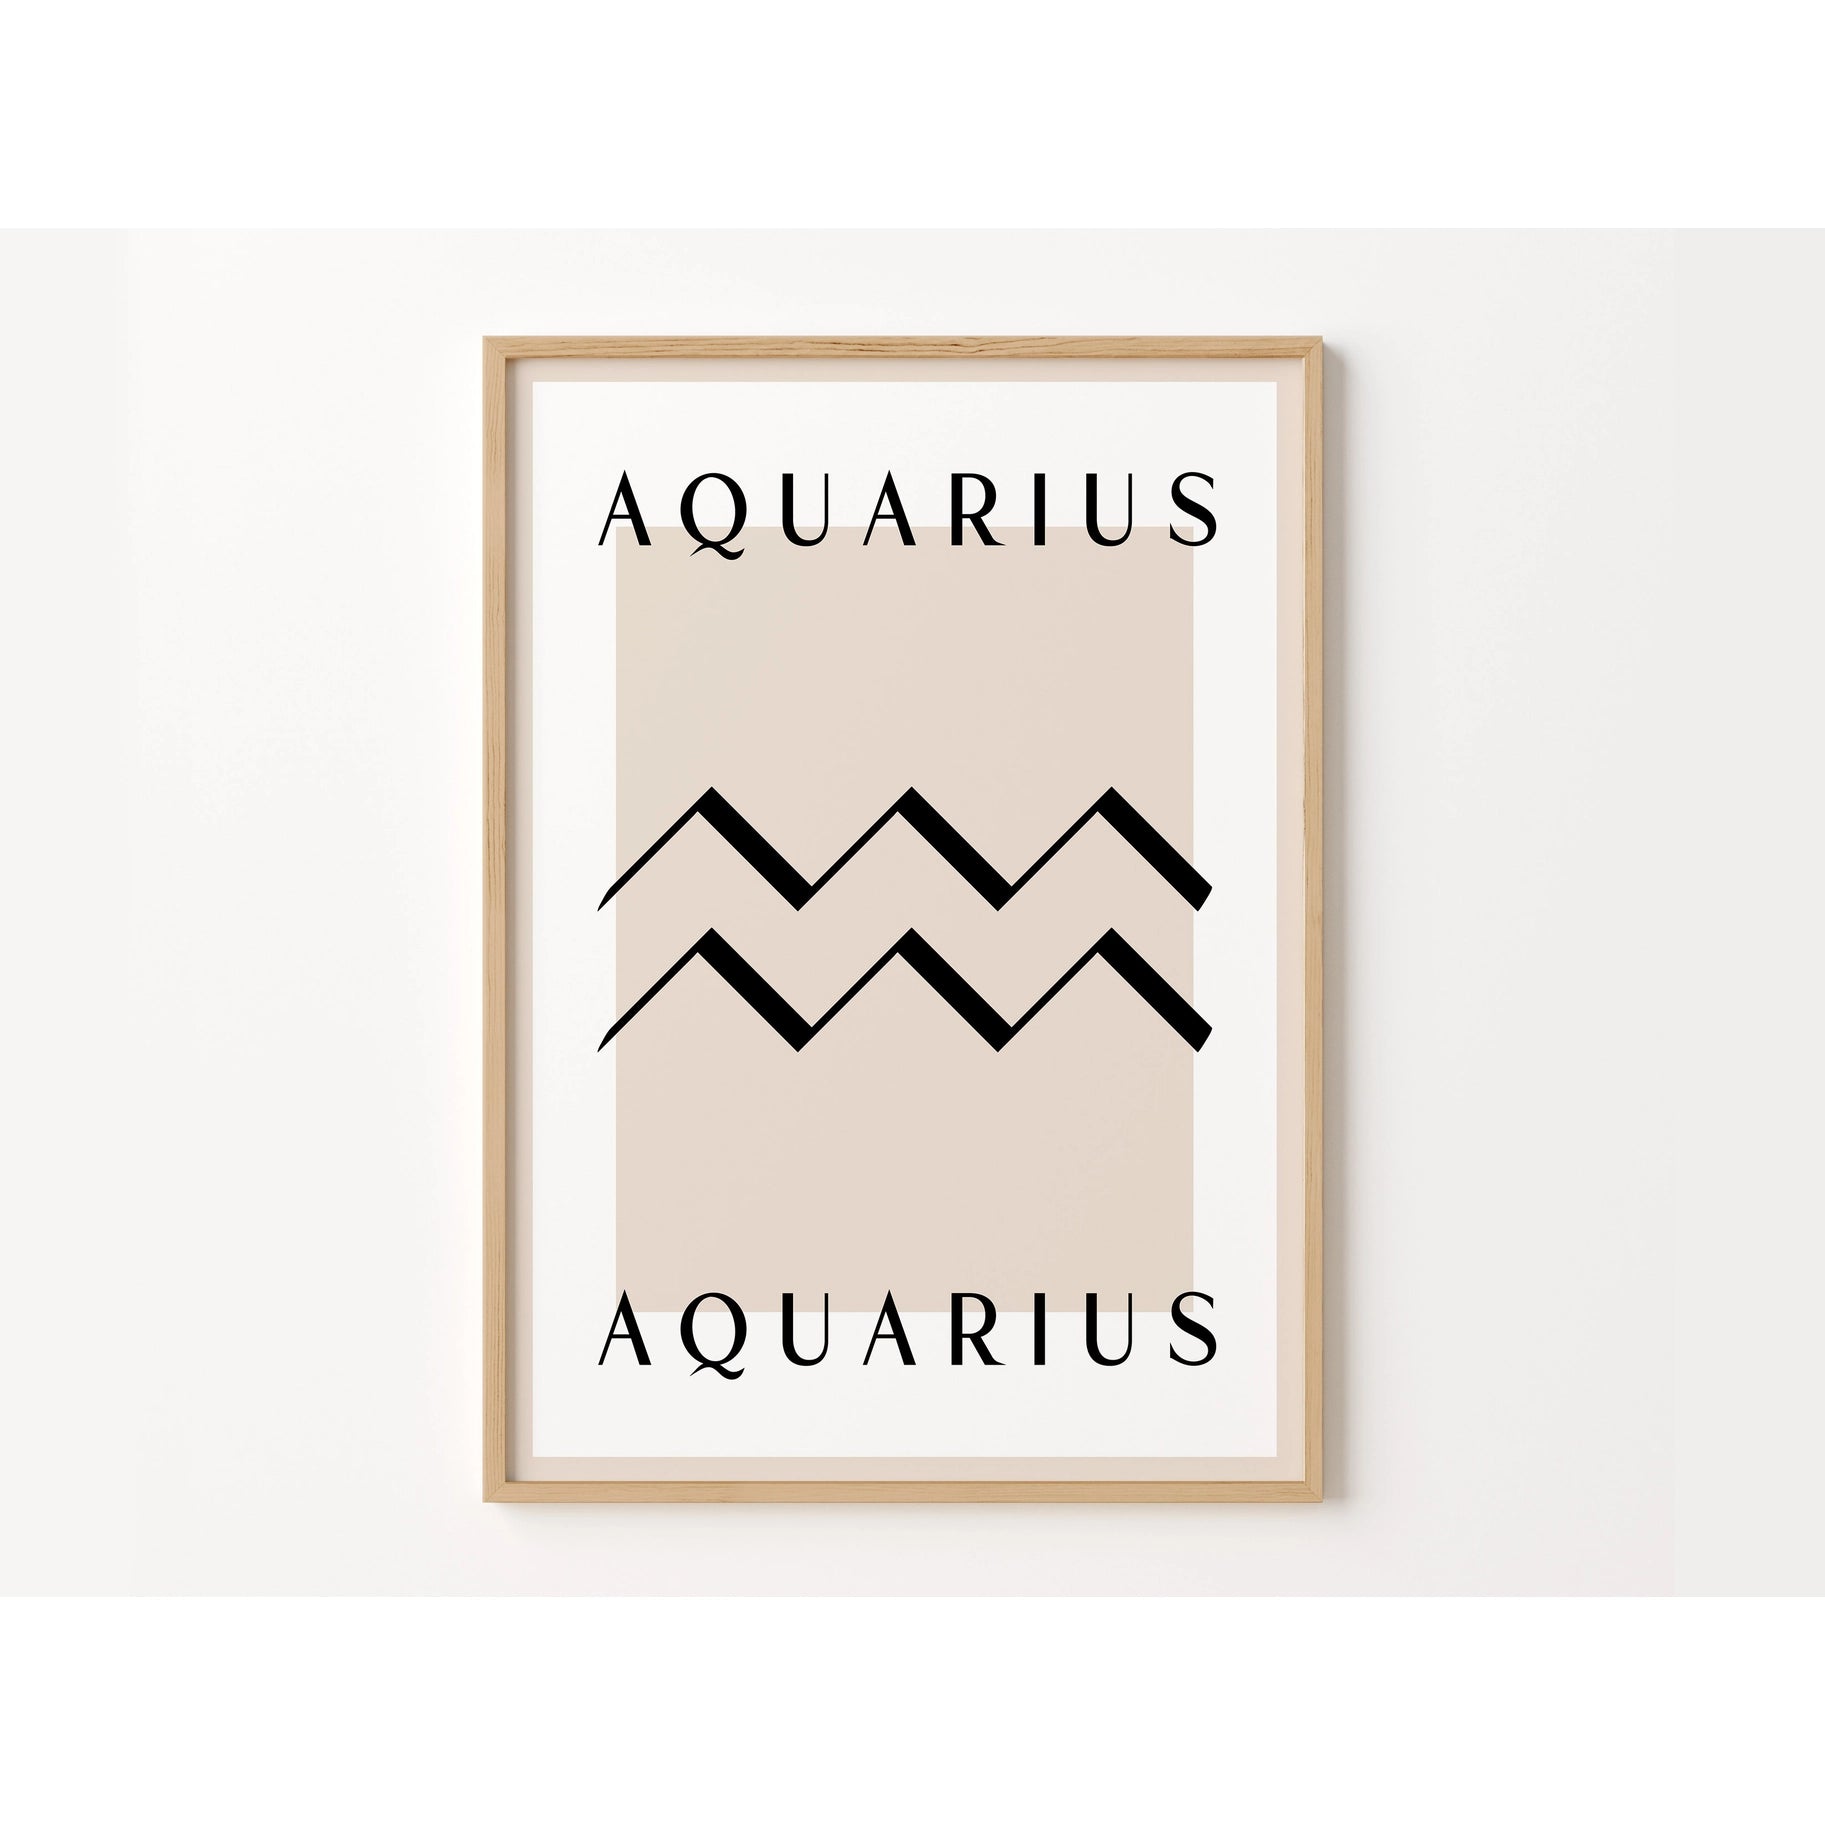 Aquarius Zodiac Star Sign / Horoscope A4 Art Print